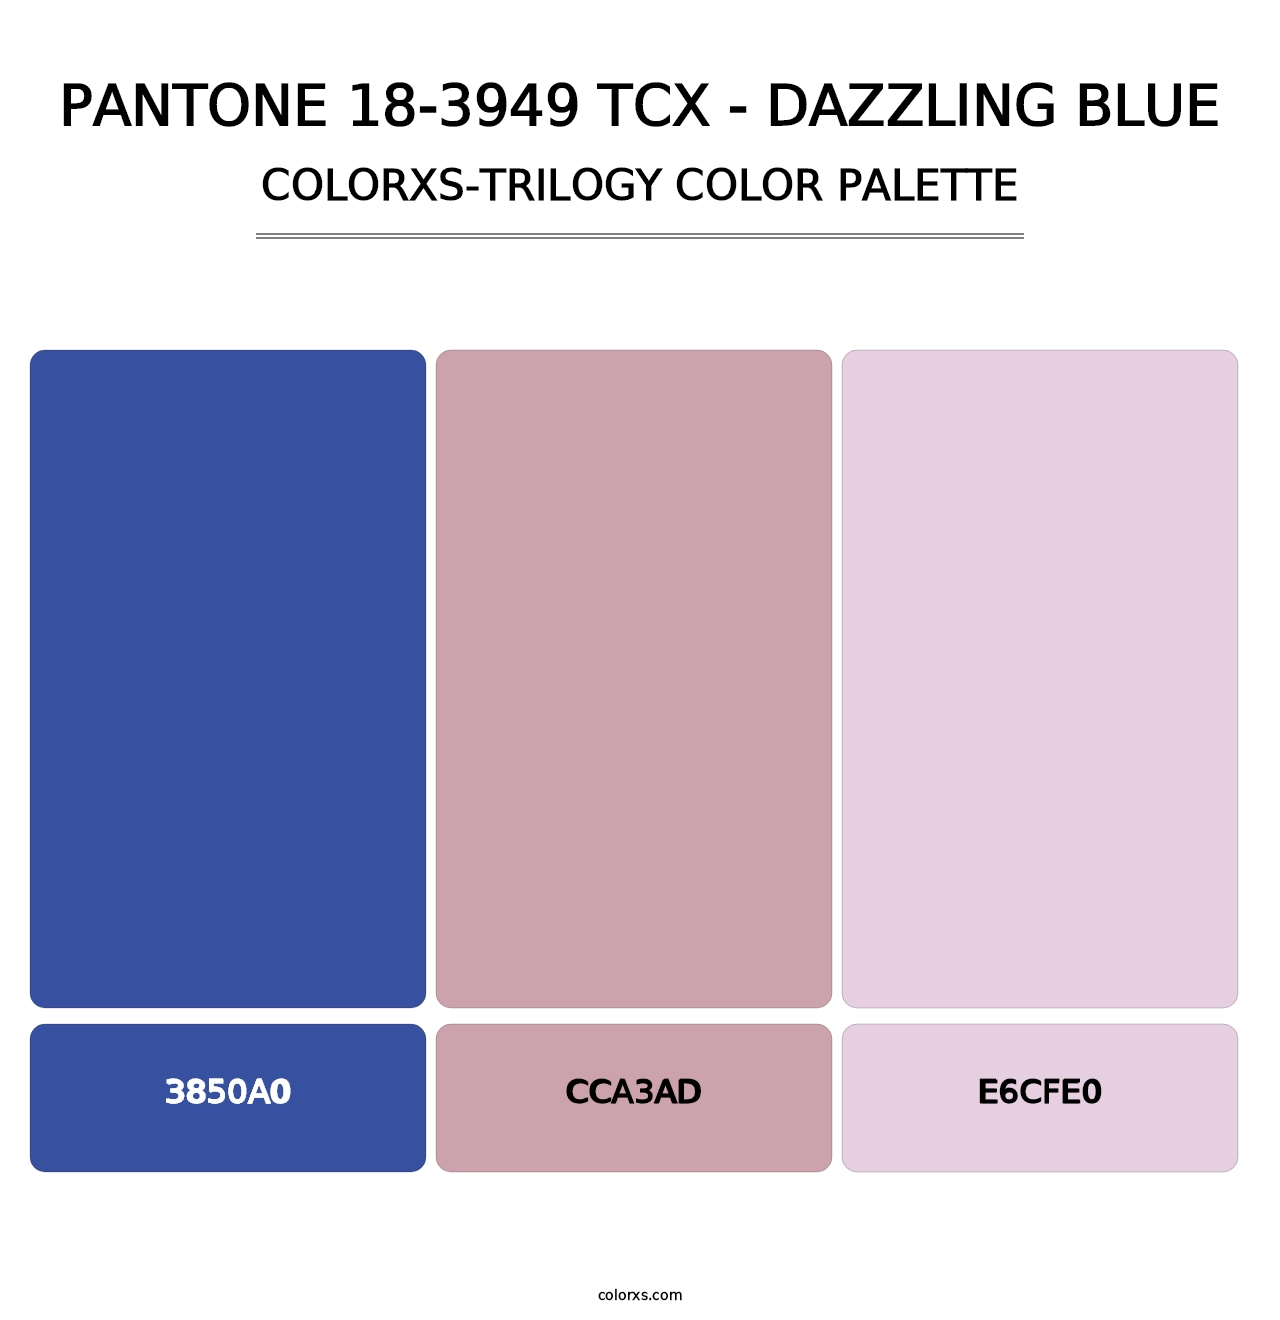 PANTONE 18-3949 TCX - Dazzling Blue - Colorxs Trilogy Palette